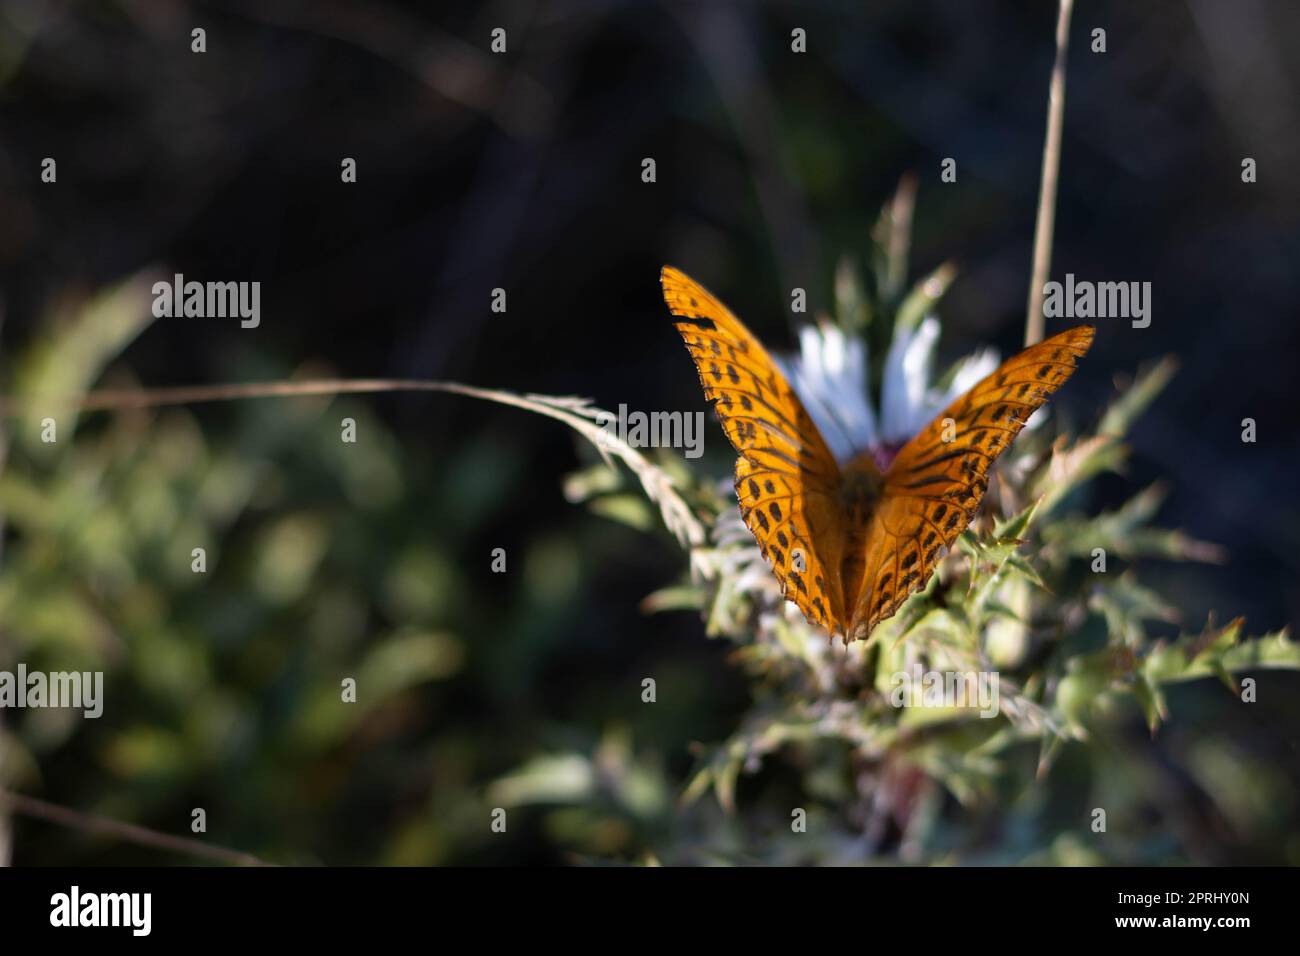 Silberner Fritillar-Schmetterling, dunkelorange mit schwarzen Flecken, Parma Italien Stockfoto